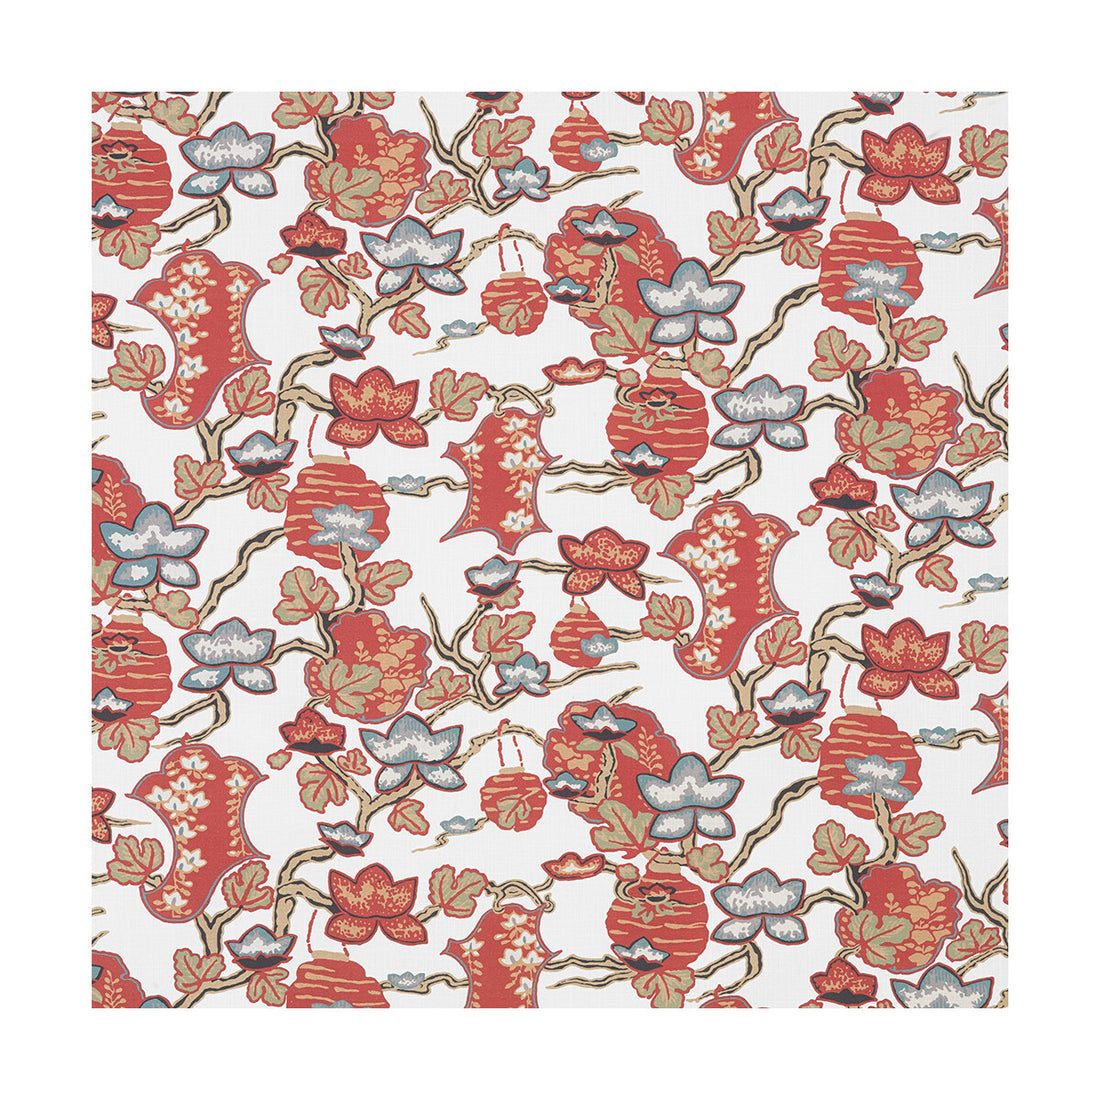 Maria fabric in fresa/agua color - pattern LCT5364.002.0 - by Gaston y Daniela in the Lorenzo Castillo III collection